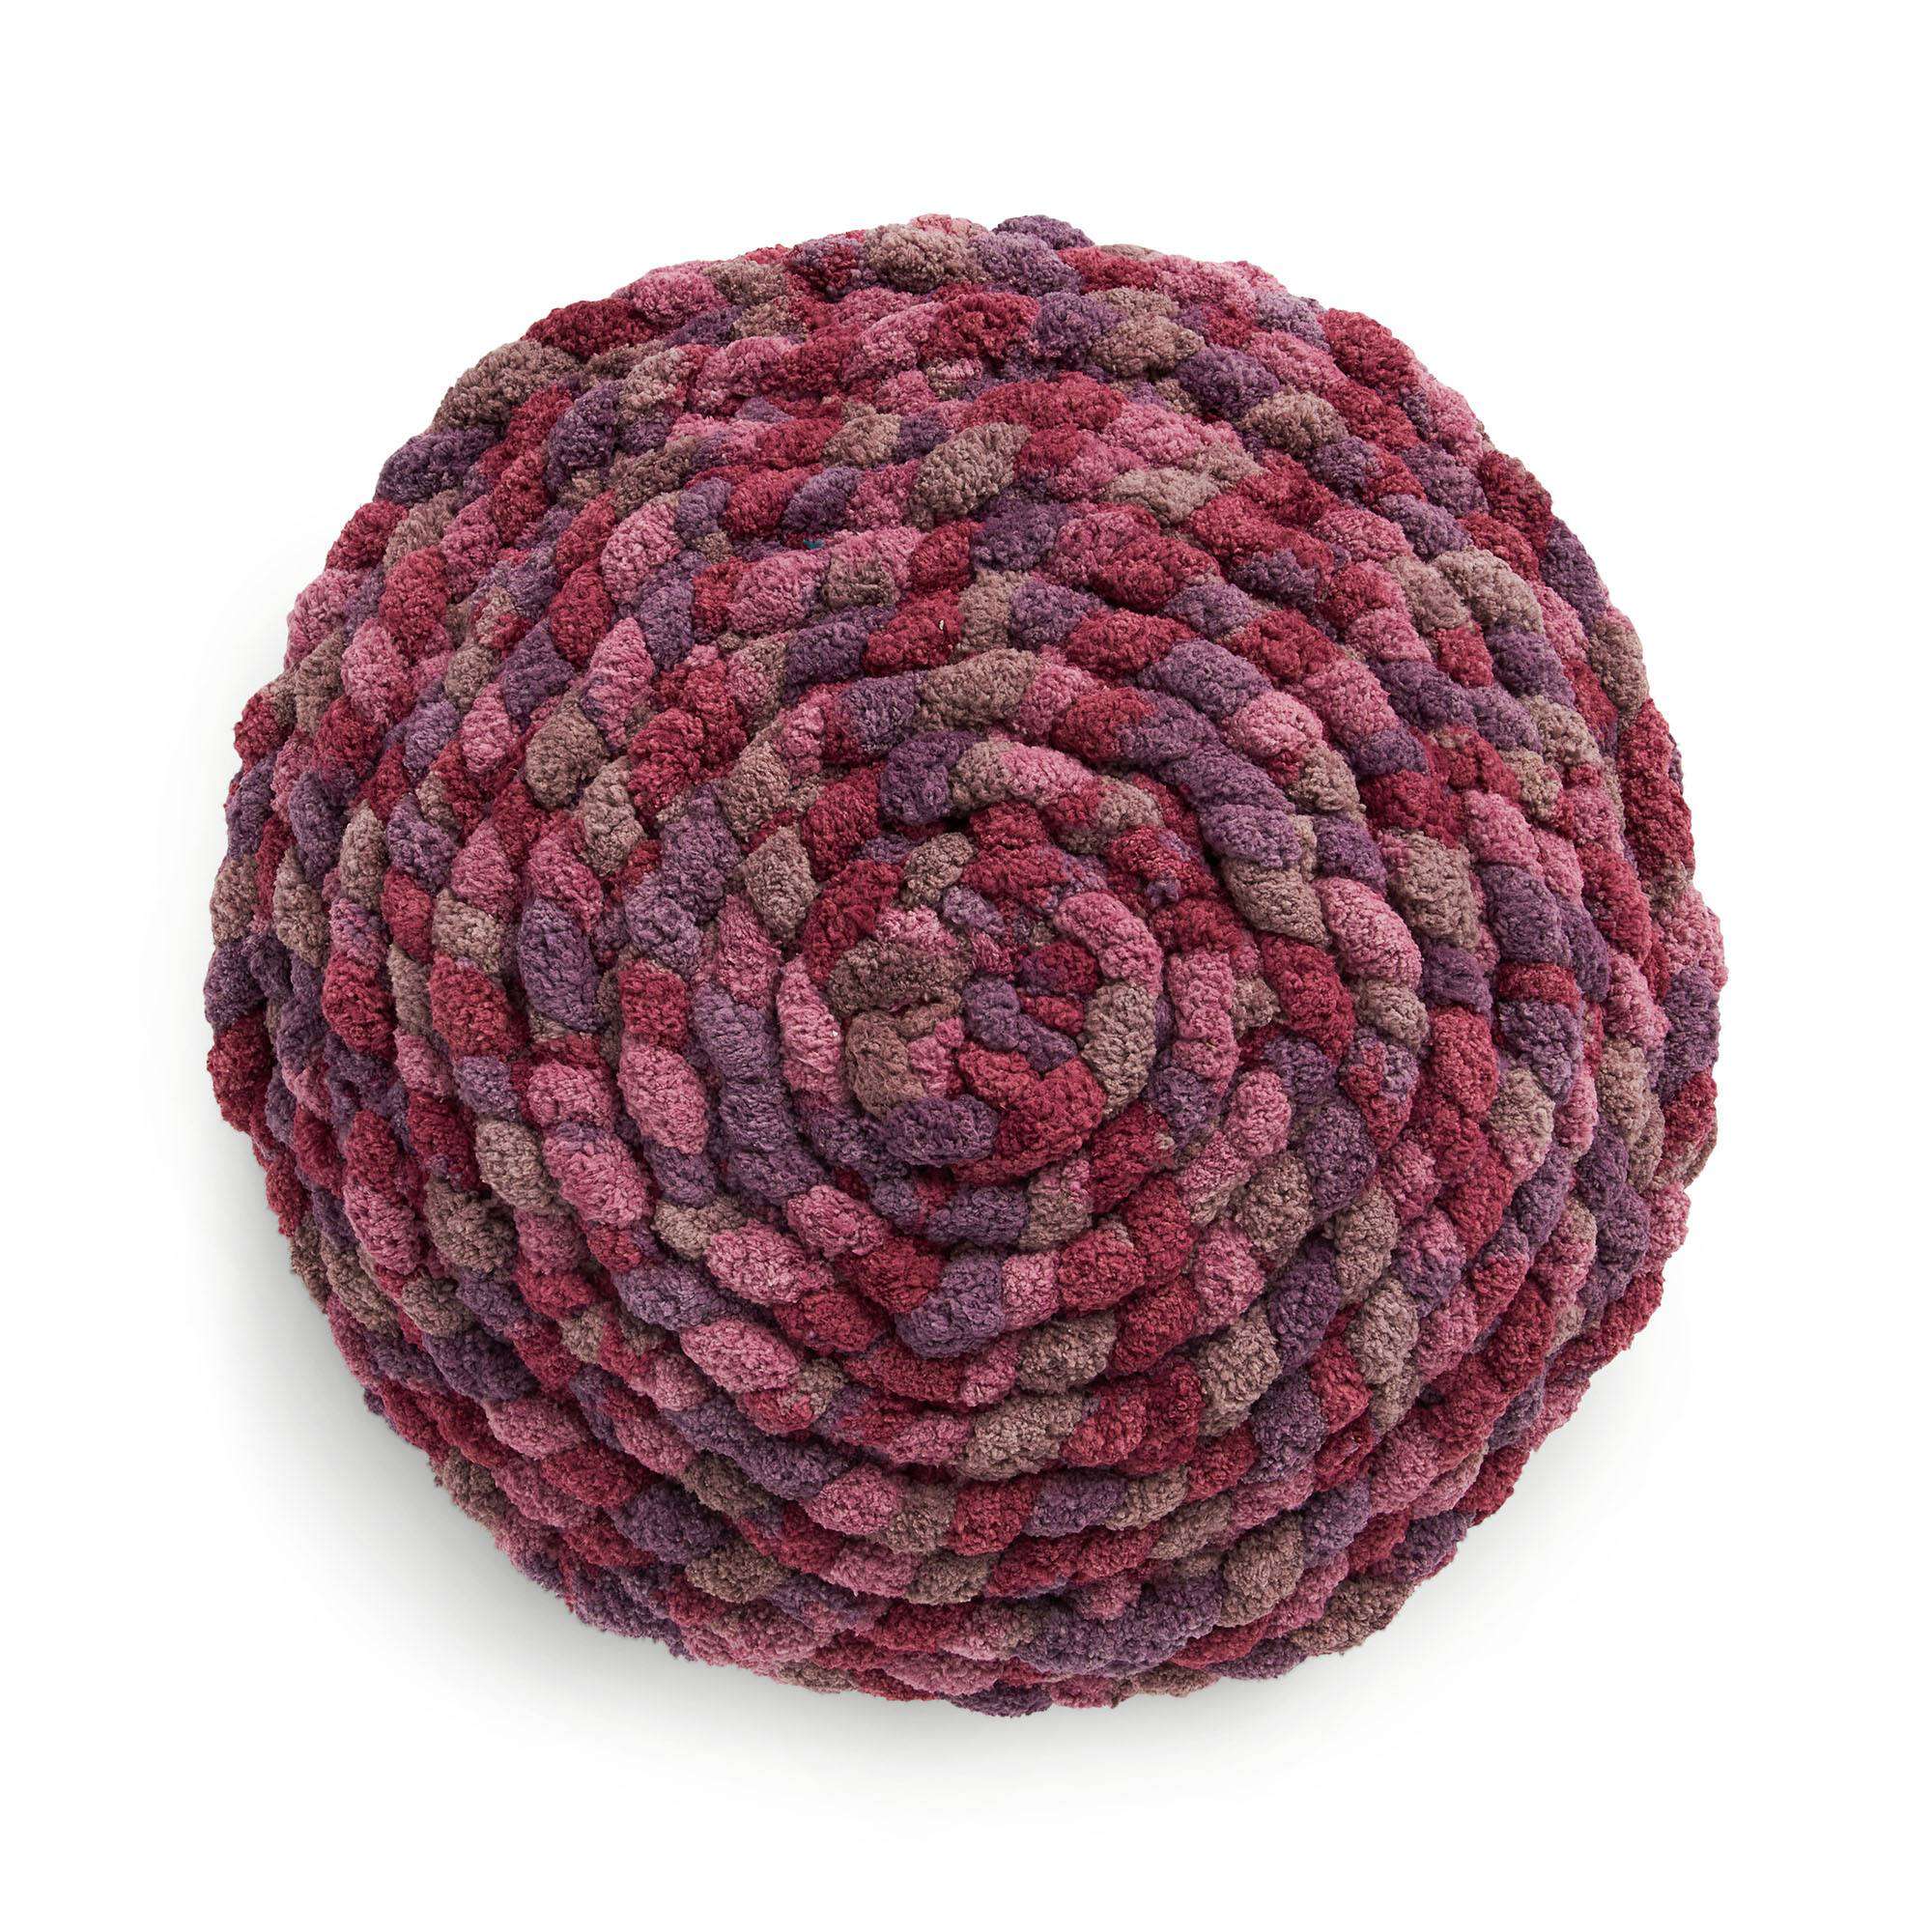 Susan Bates Xtreme Wood 9 Crochet Hook U.S. 50 (25 mm) - Discontinued Items